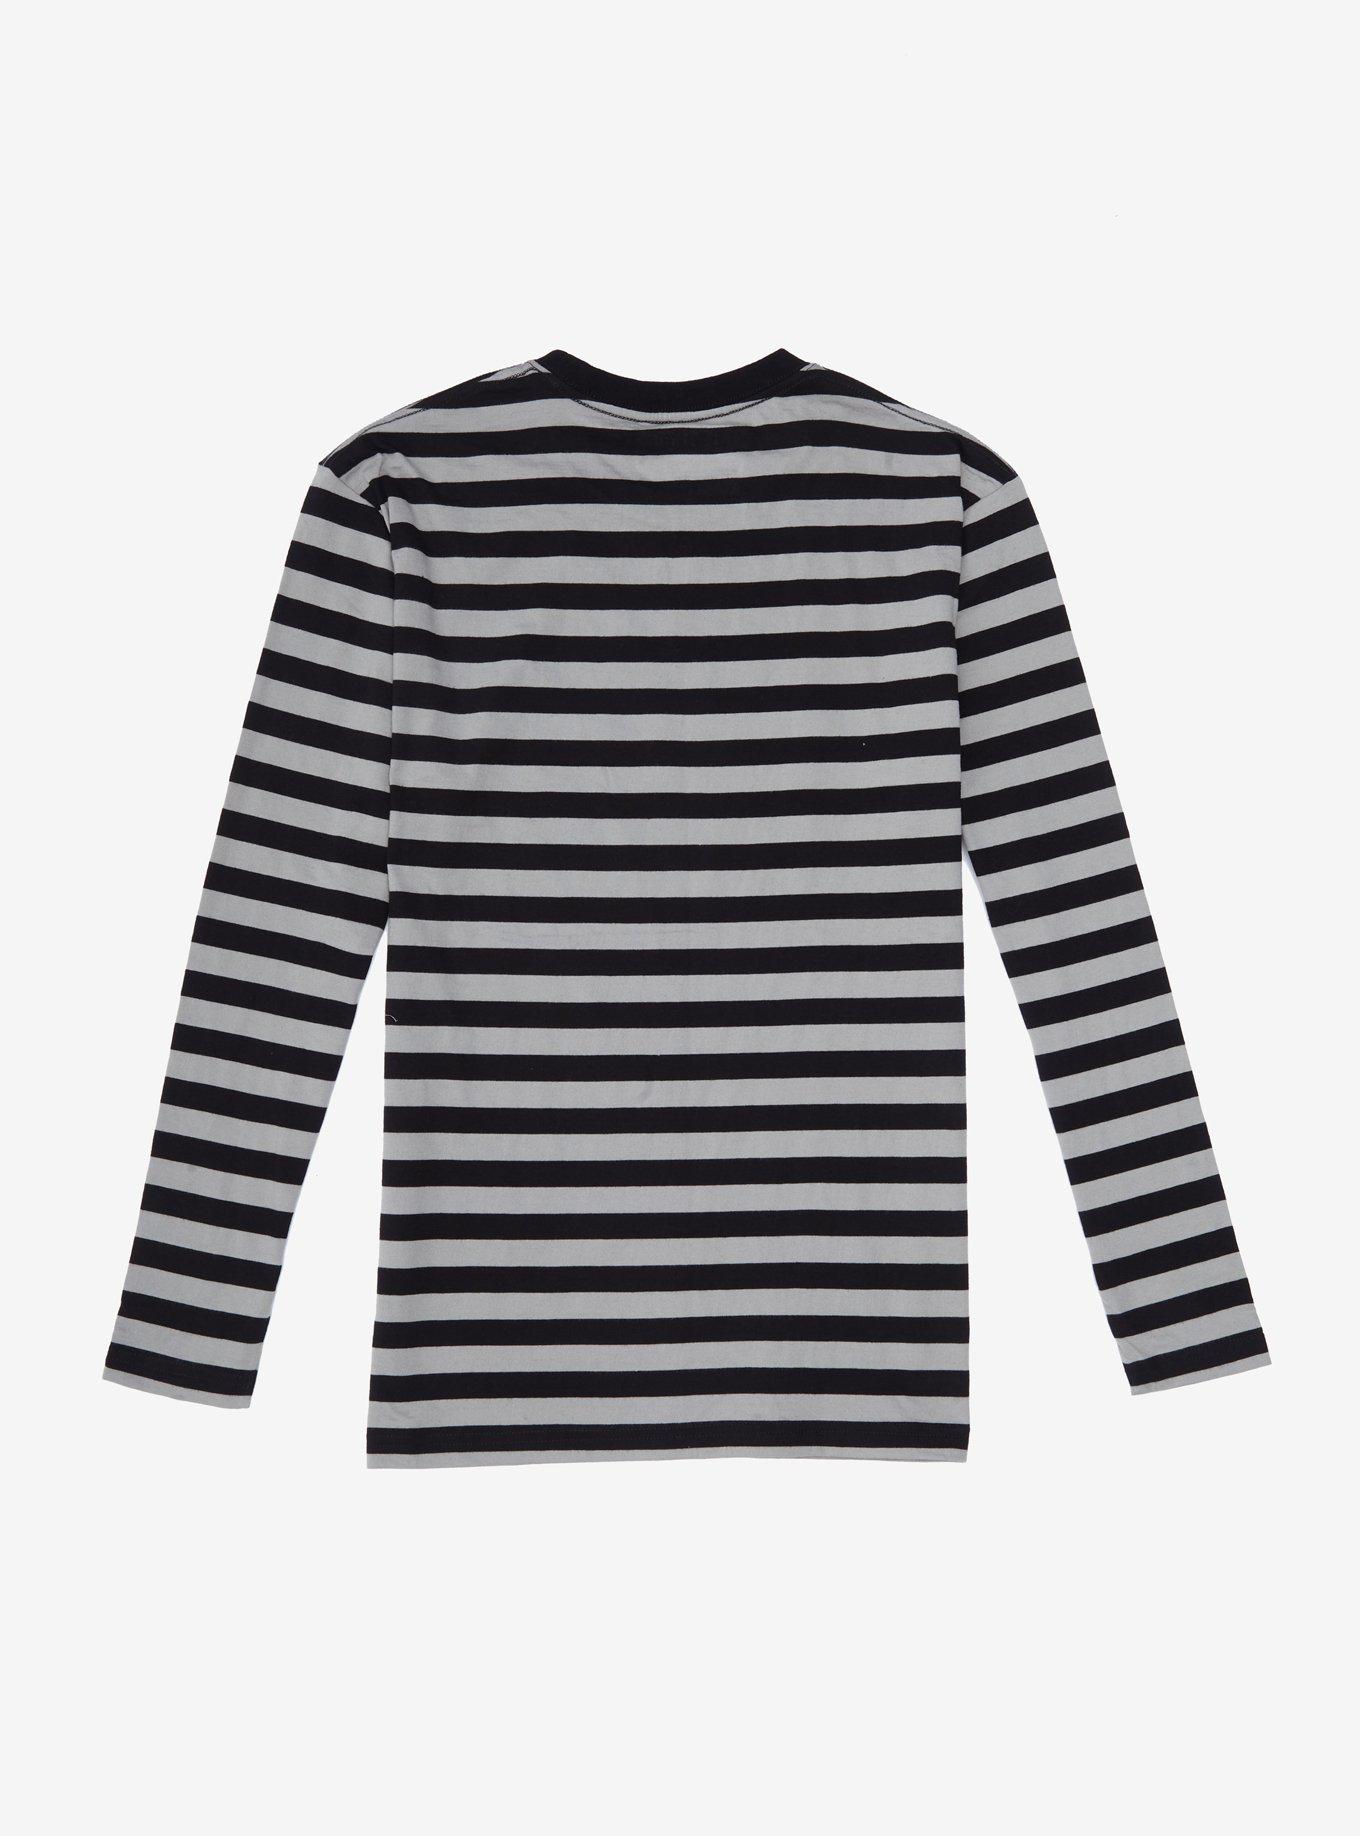 Grey & Black Stripe Long-Sleeve T-Shirt, STRIPE - GREY, alternate